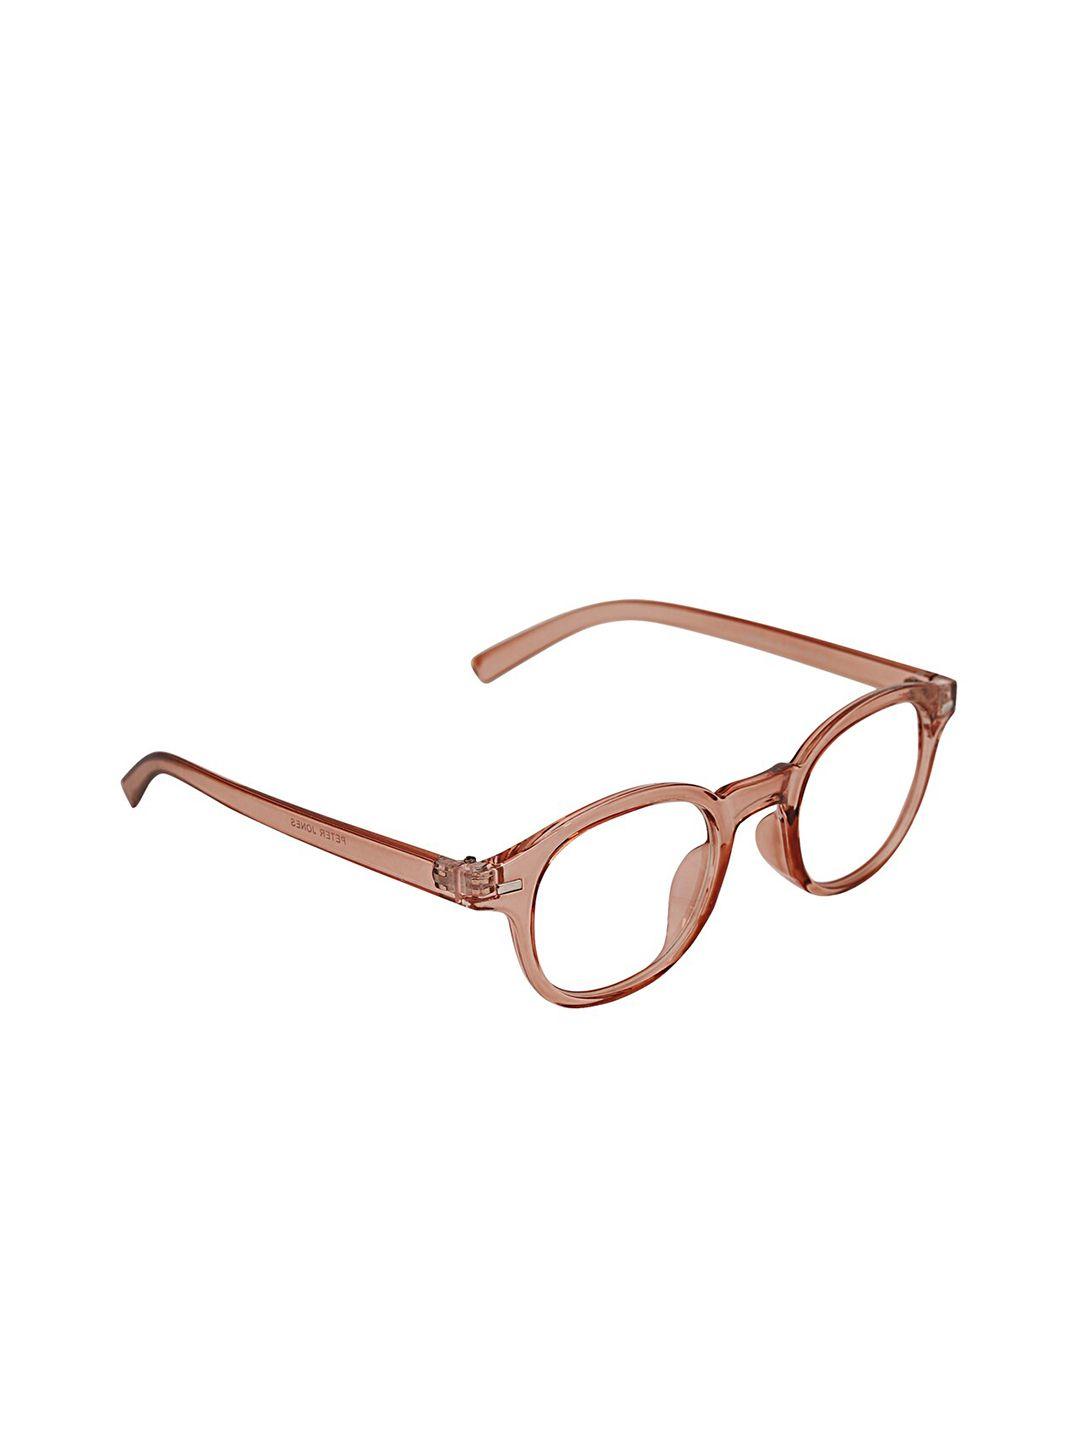 peter jones eyewear unisex brown full rim oval frames computer glasses